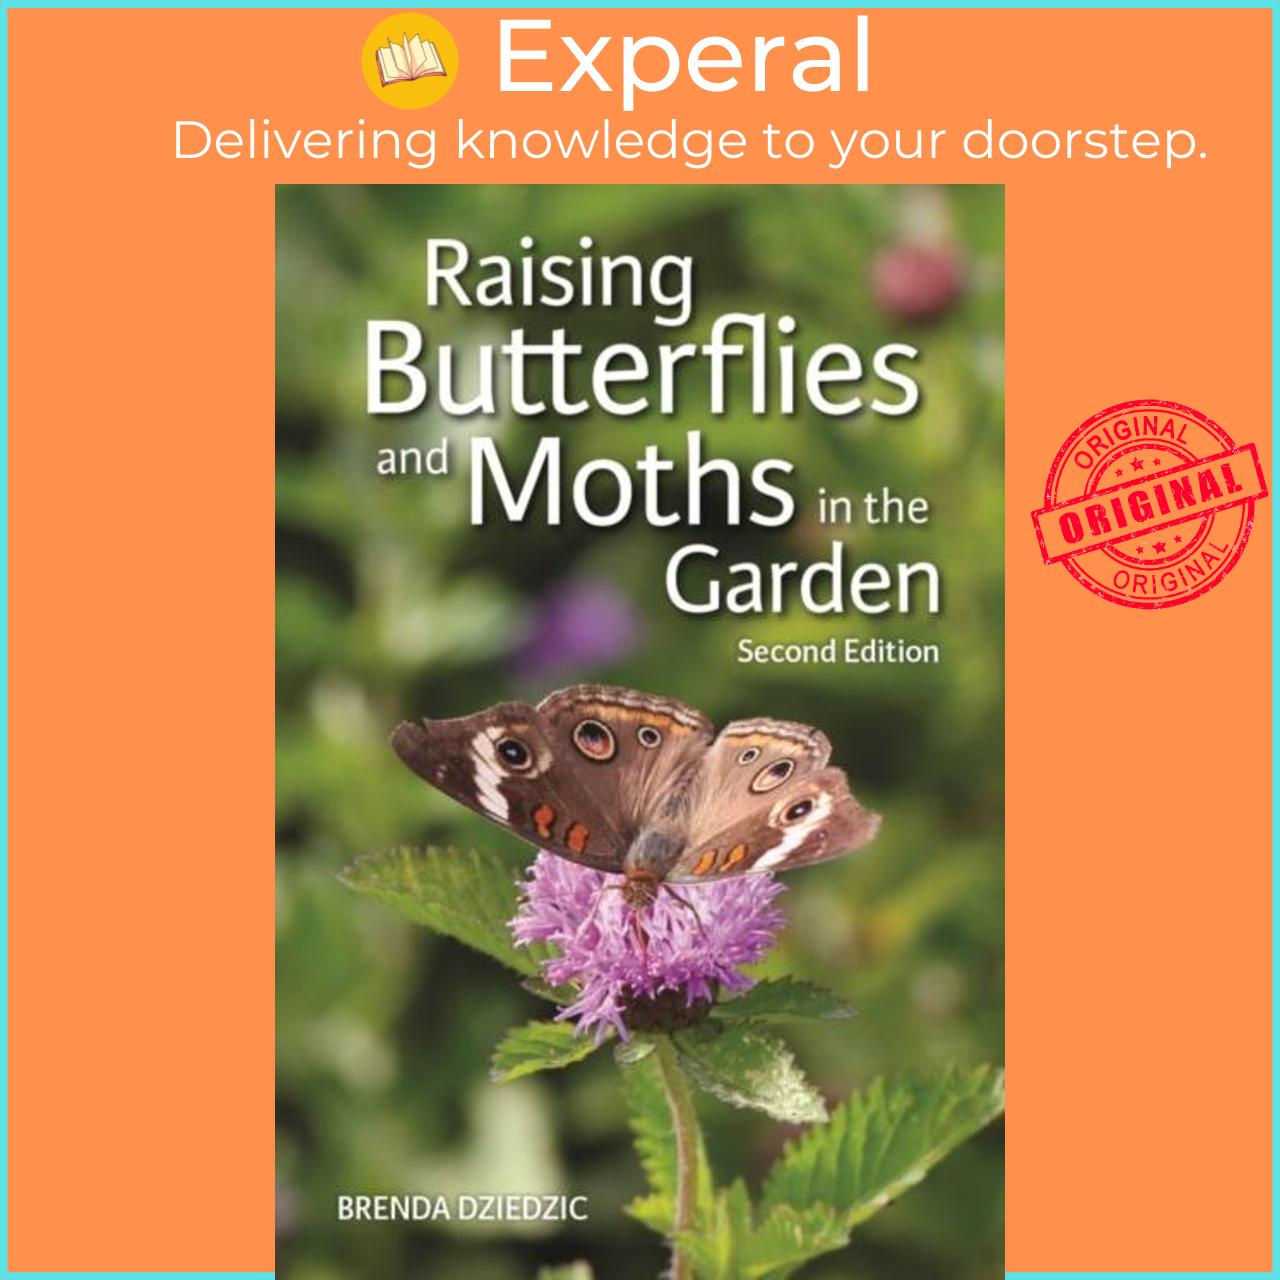 Sách - Raising Butterflies and Moths in the Garden by Brenda Dziedzic (UK edition, paperback)